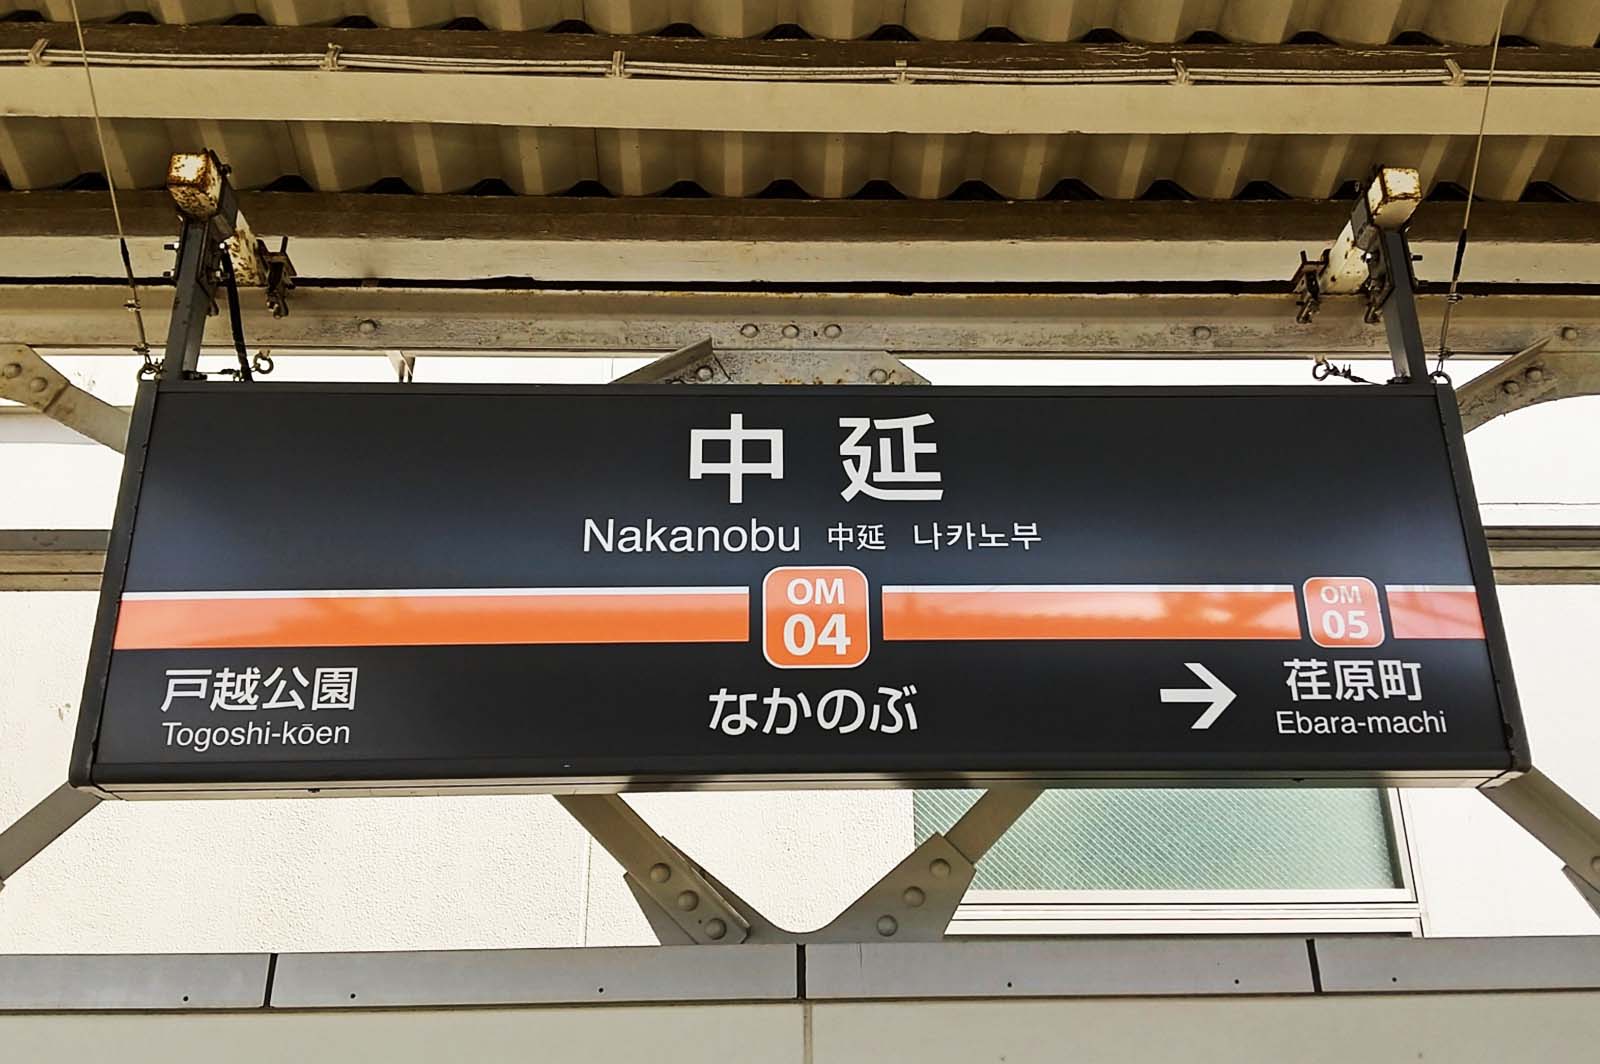 nakanobu station